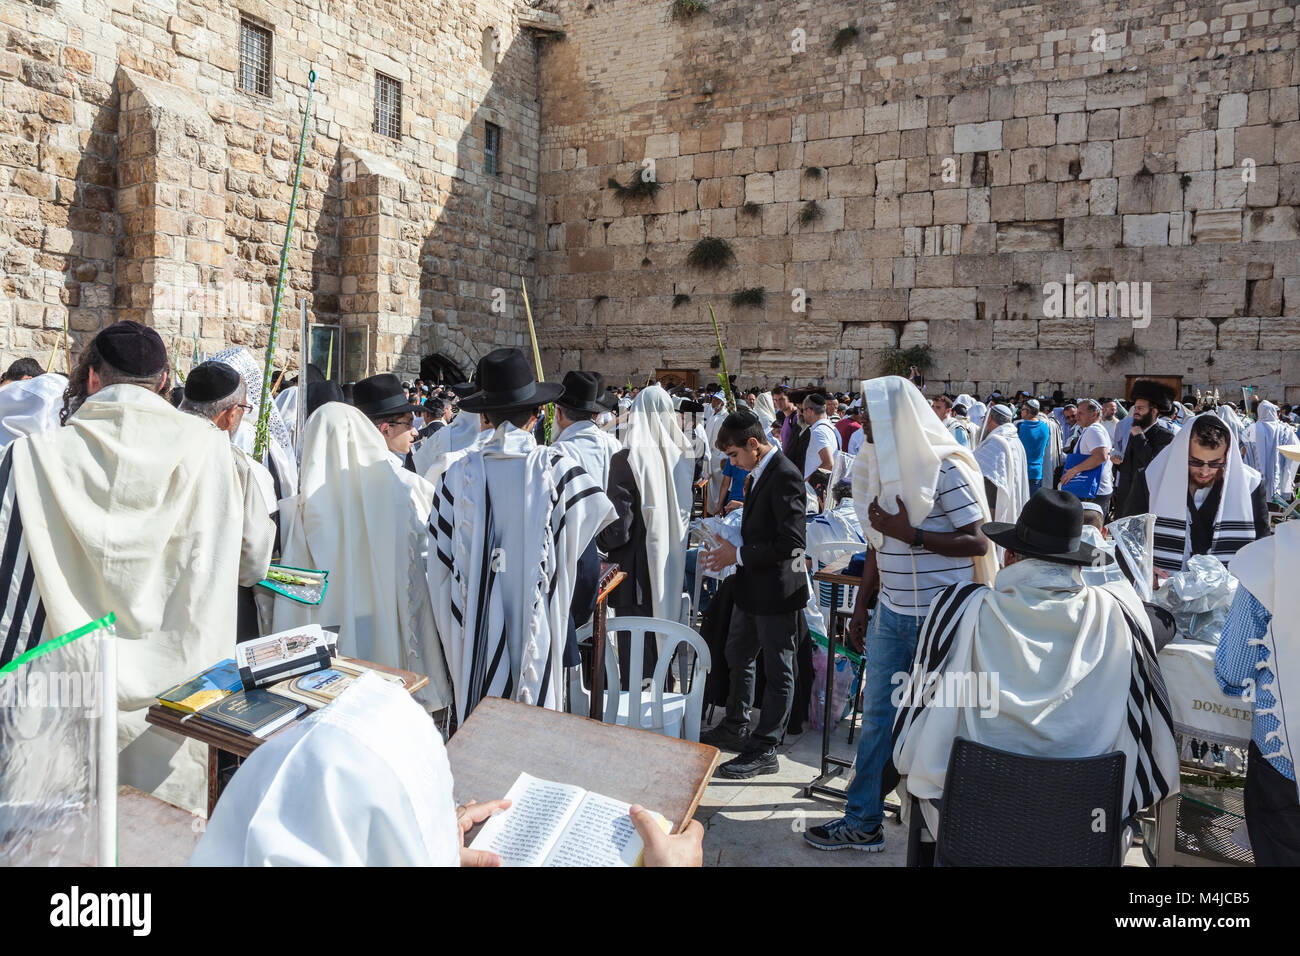 Gran multitud de fieles judíos Foto de stock